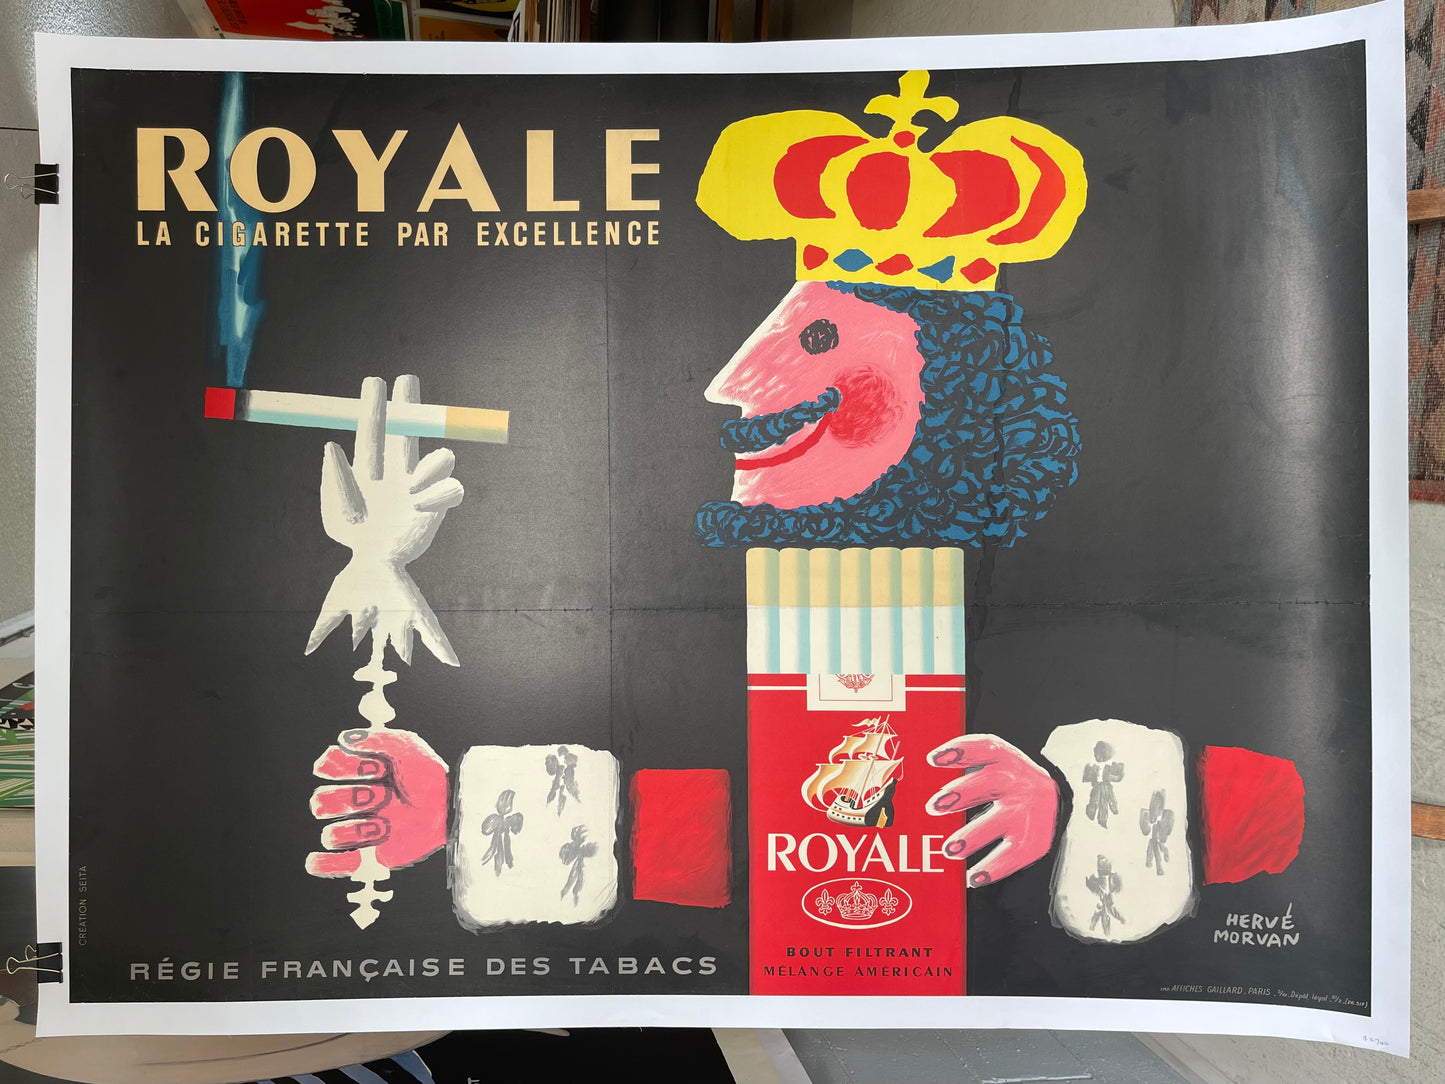 Royale Cigarette Advertisement by Herve Morvan